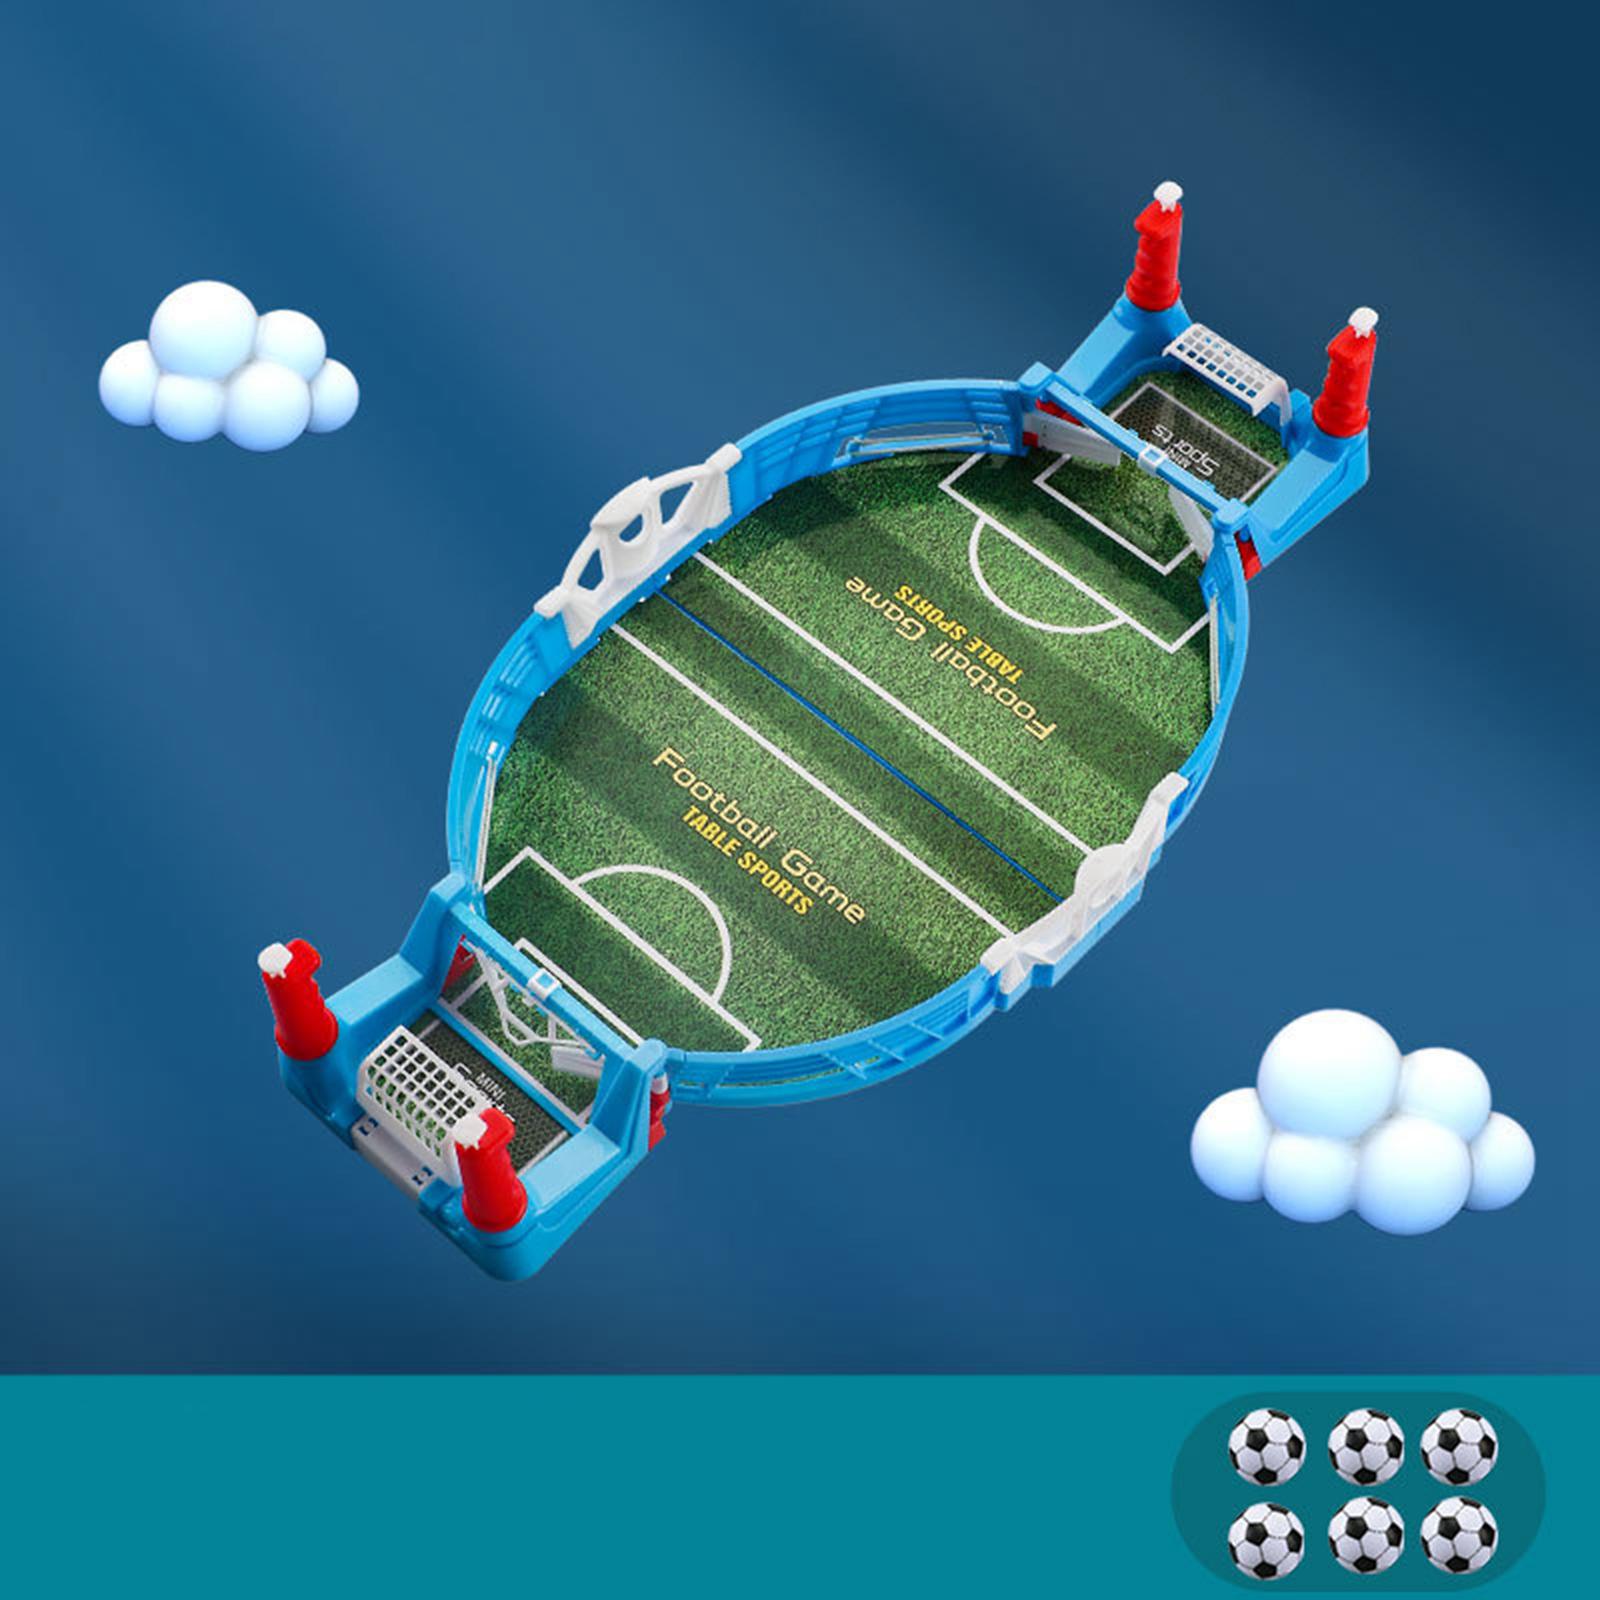 Desktop Football Board Games Kit Indoor Toy Sports for Adults Kids 38cmx18cm 4 Balls